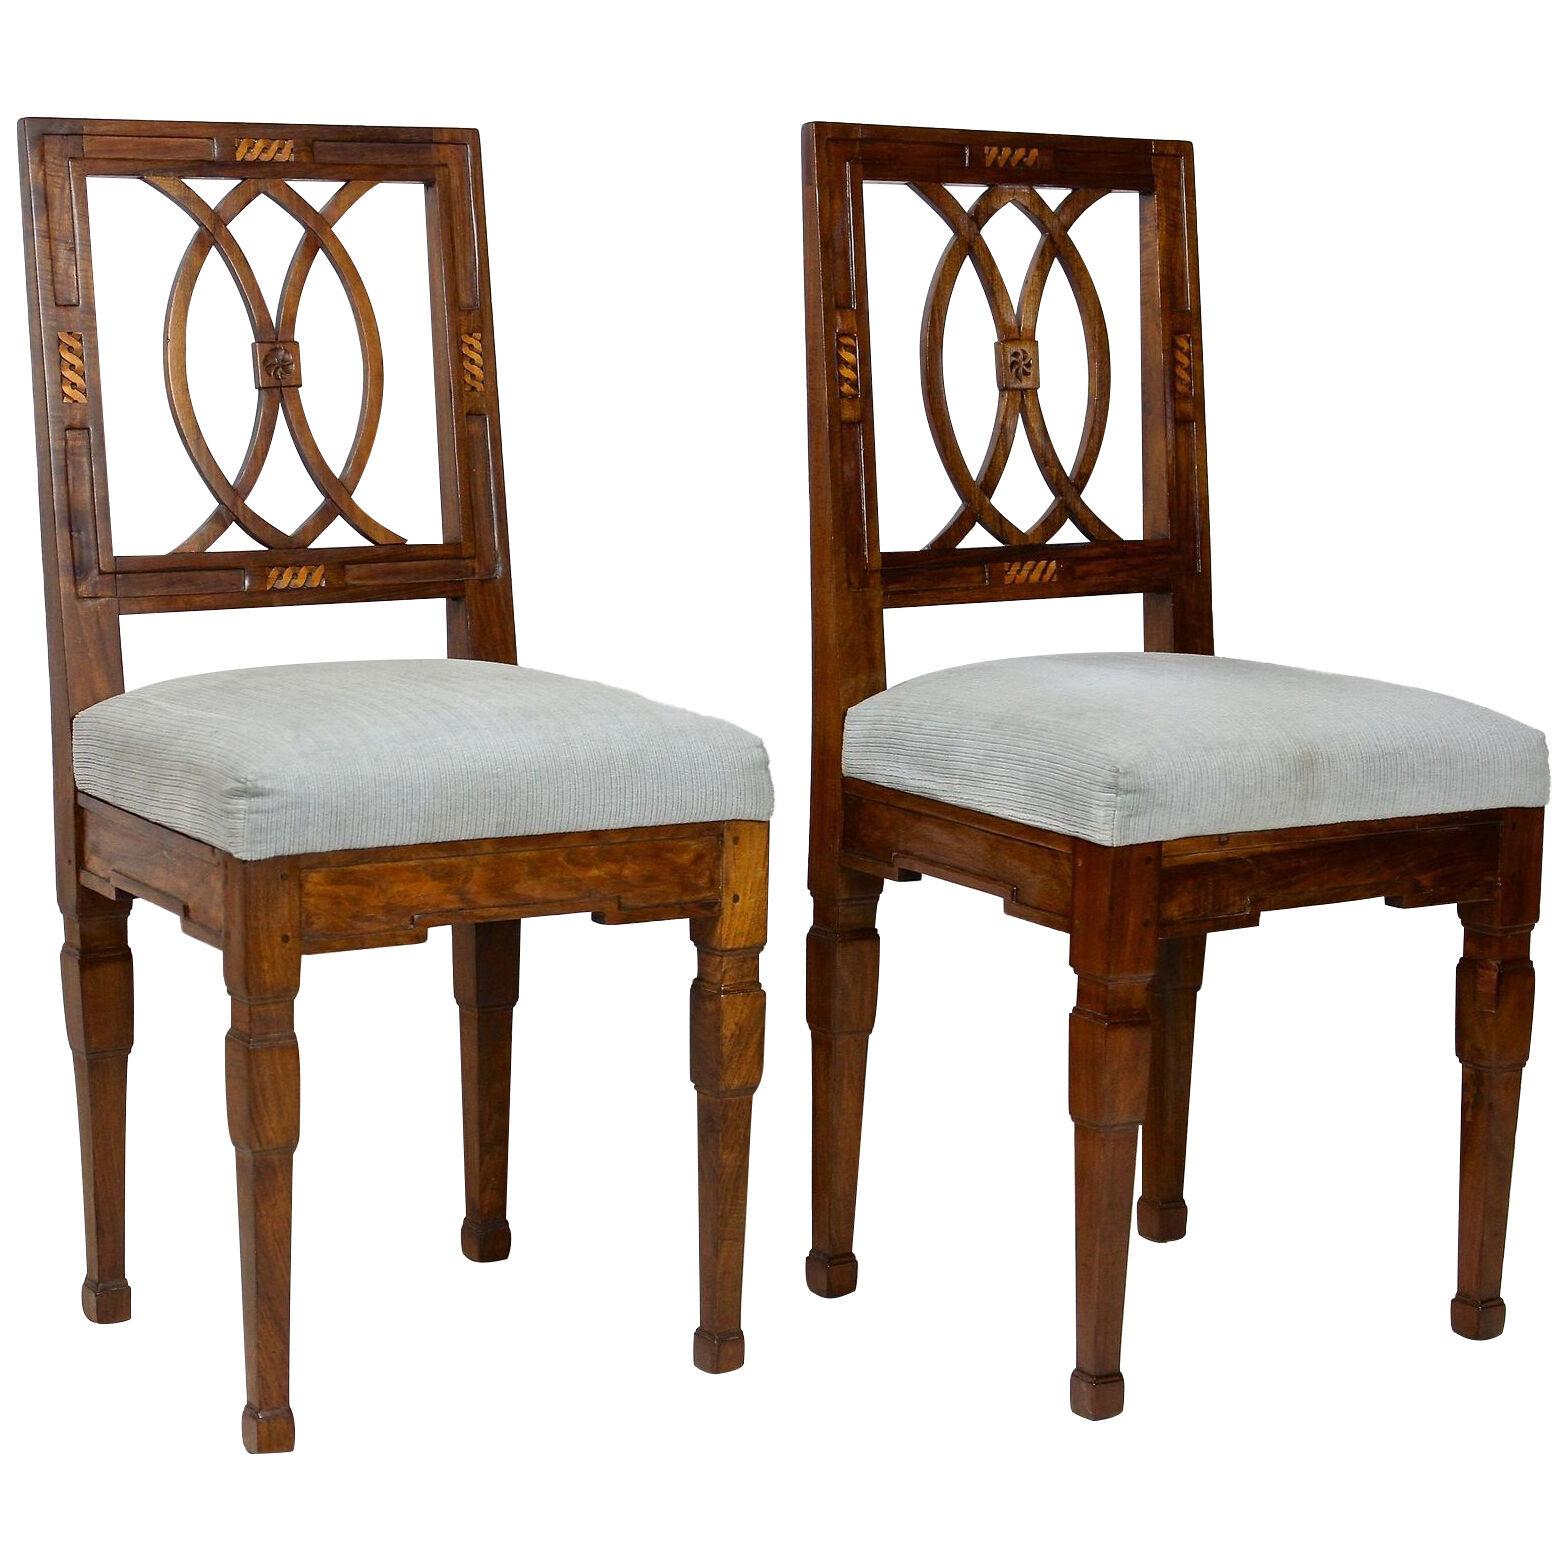 Pair Of 18th Century Nutwood Chairs - Josephinism Period, Austria circa 1790